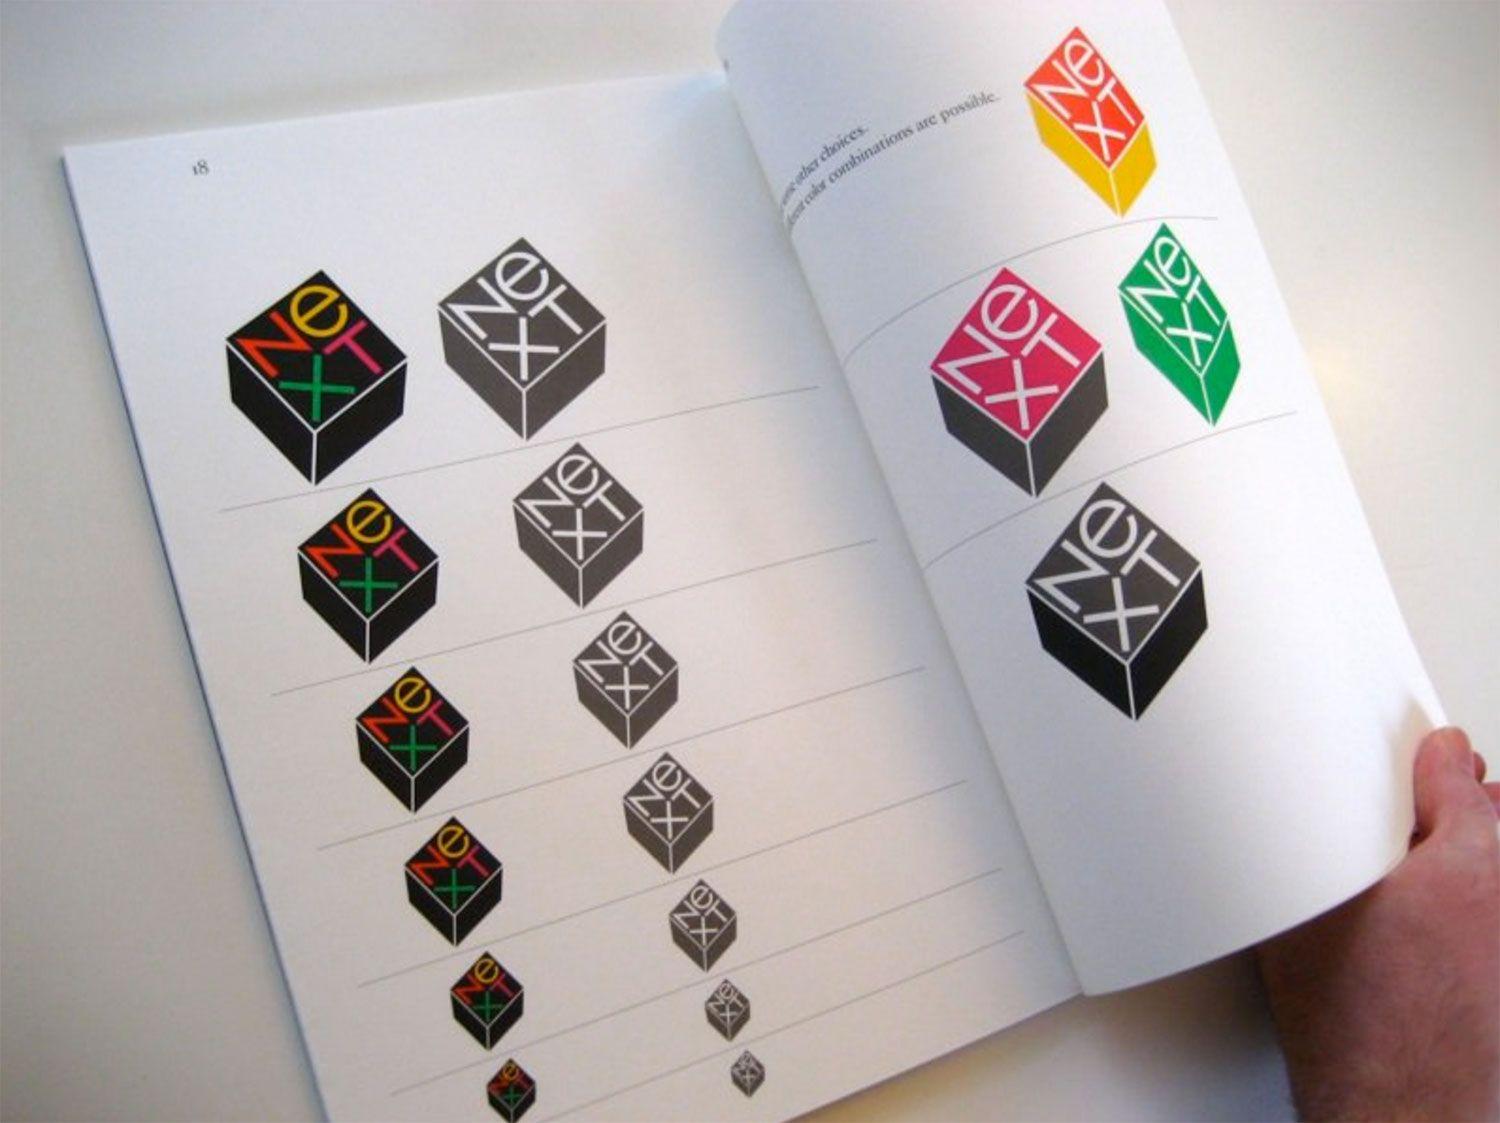 Next Logo - NeXT logo presentation, by Paul Rand, for Steve Jobs | Logo Design Love